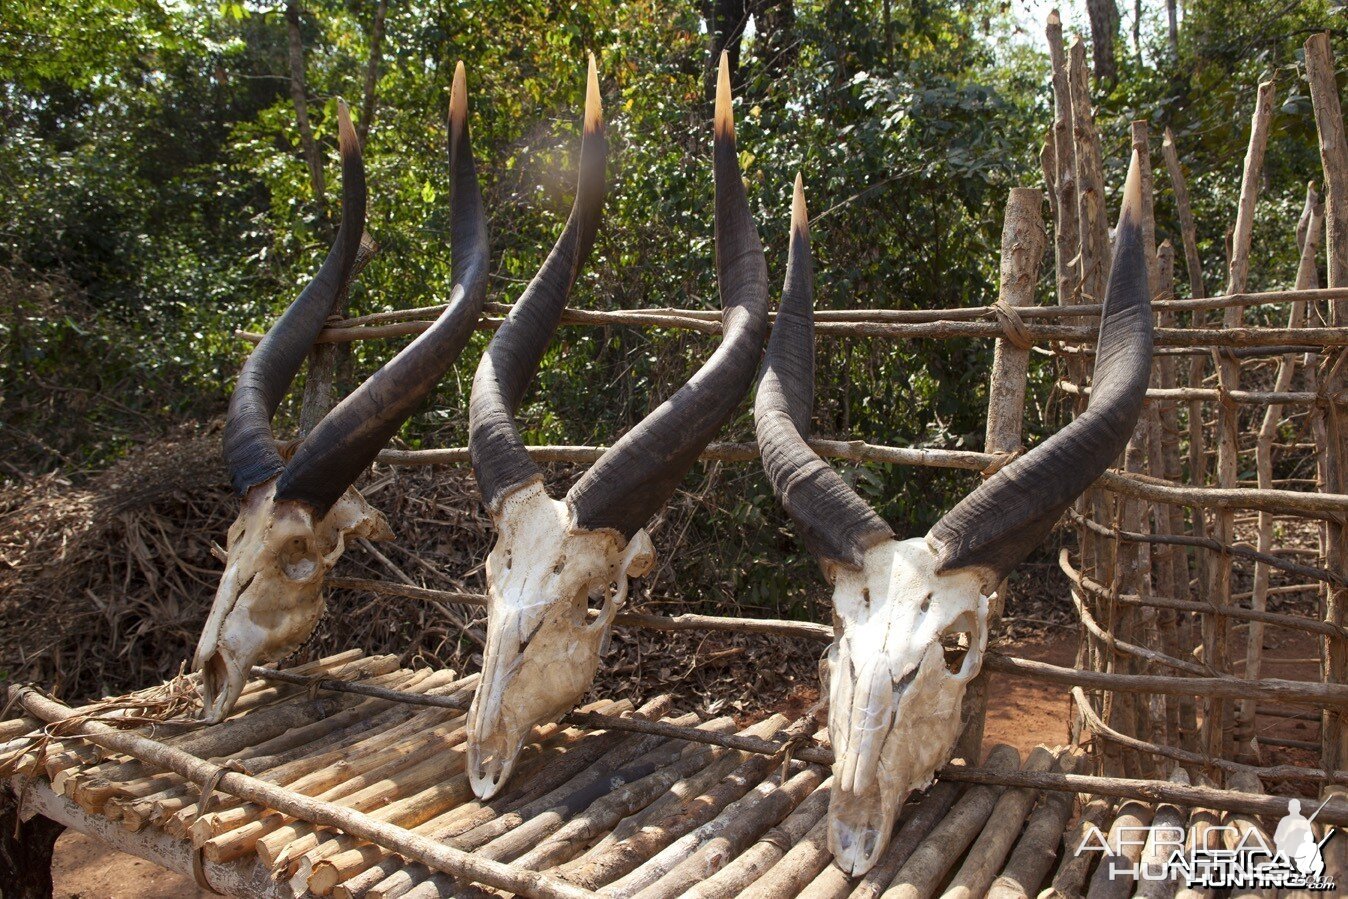 Three sets of Bongo horns